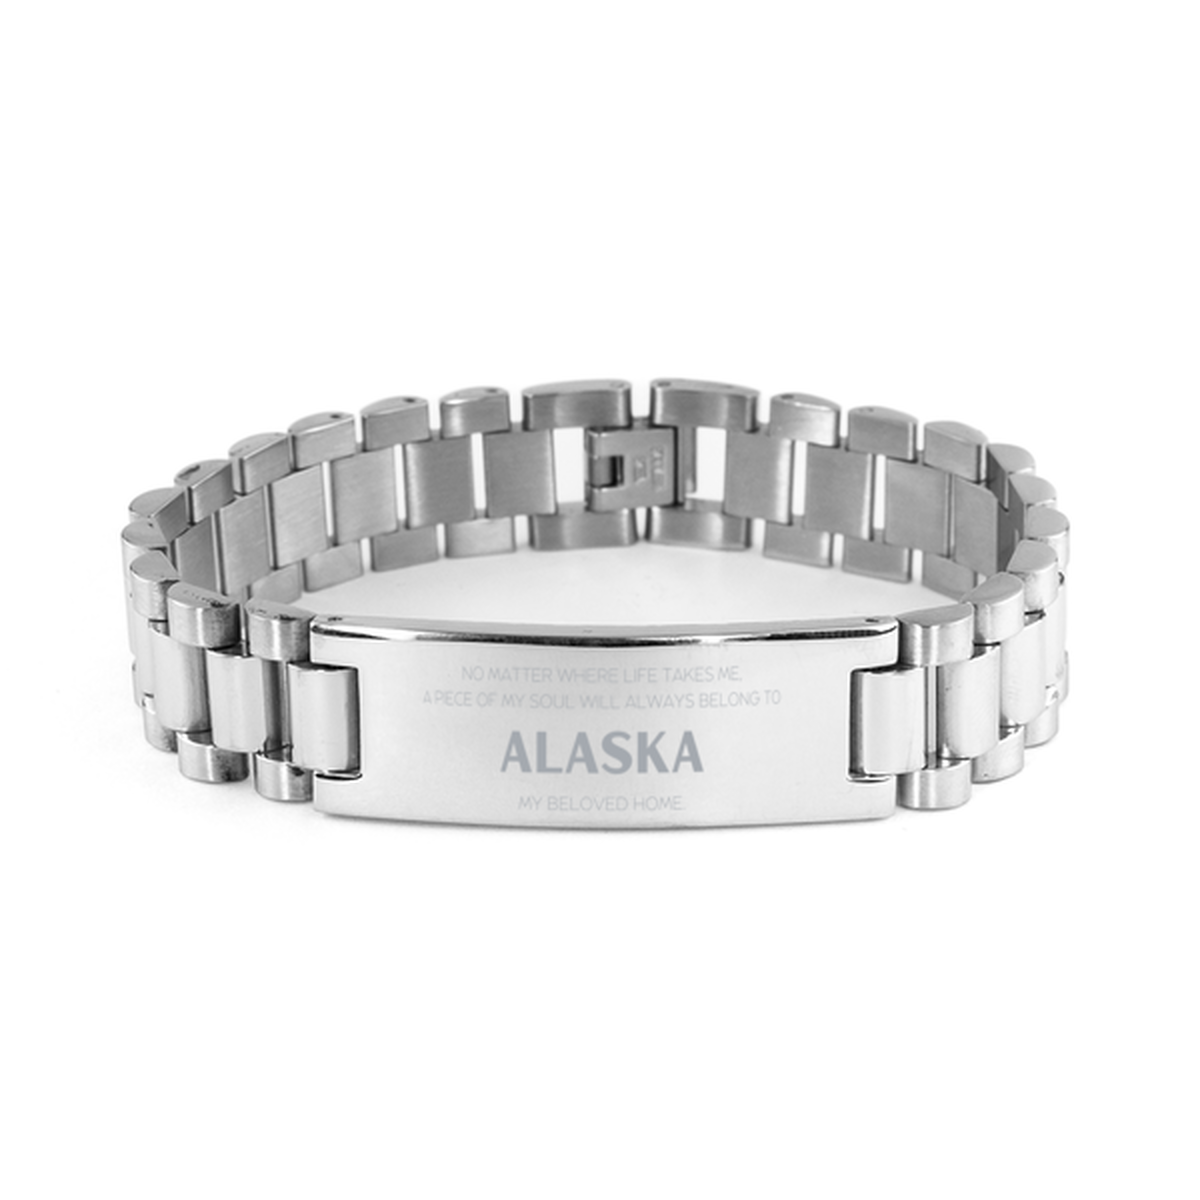 Love Alaska State Gifts, My soul will always belong to Alaska, Proud Ladder Stainless Steel Bracelet, Birthday Unique Gifts For Alaska Men, Women, Friends